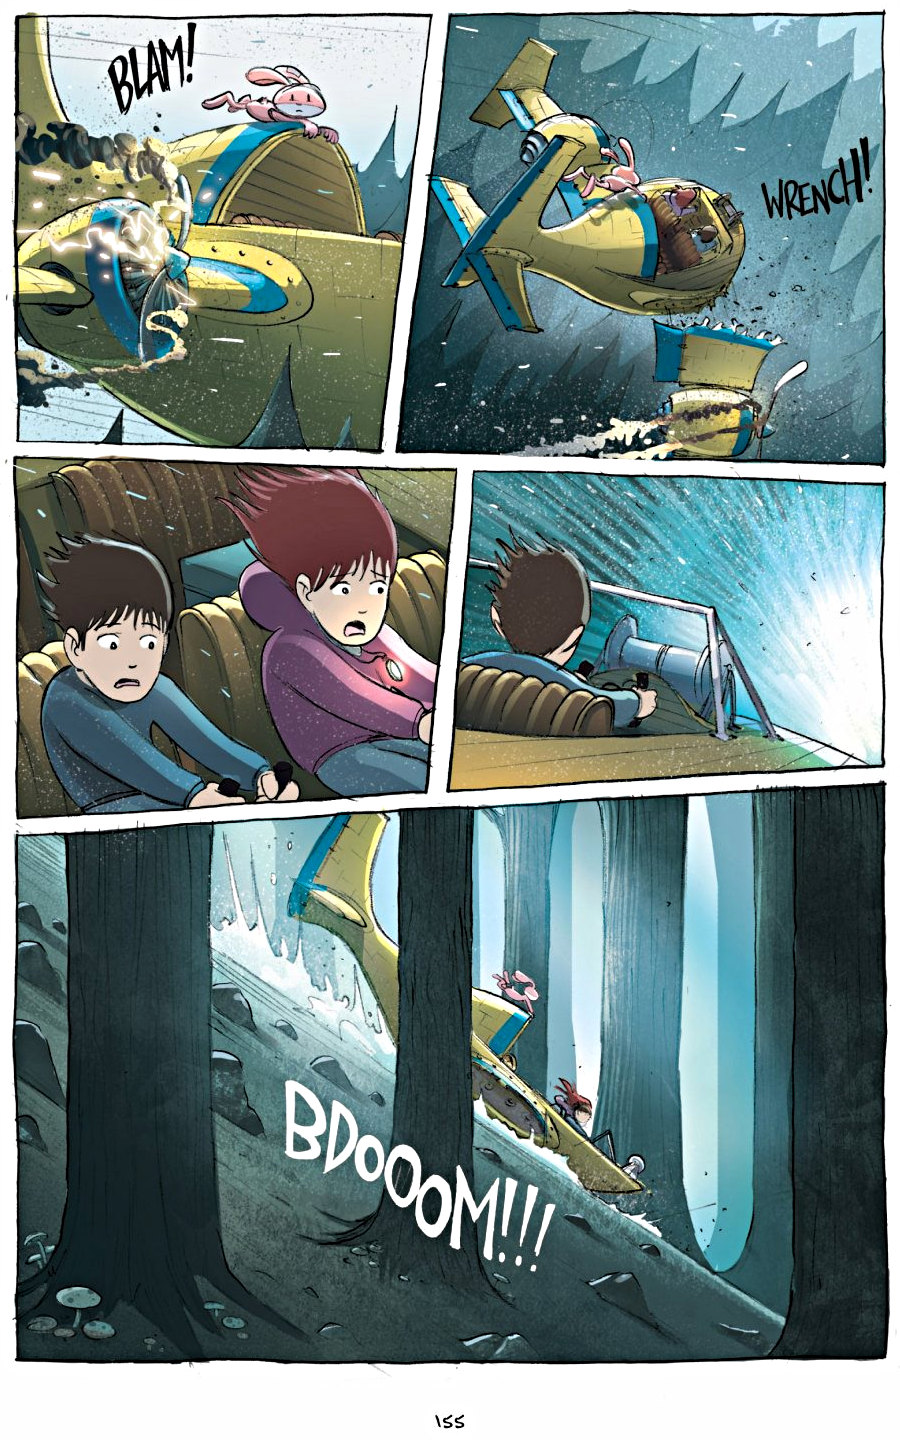 page 155 of amulet 1 stonekeeper graphic novel by kazu kibuishi - read online